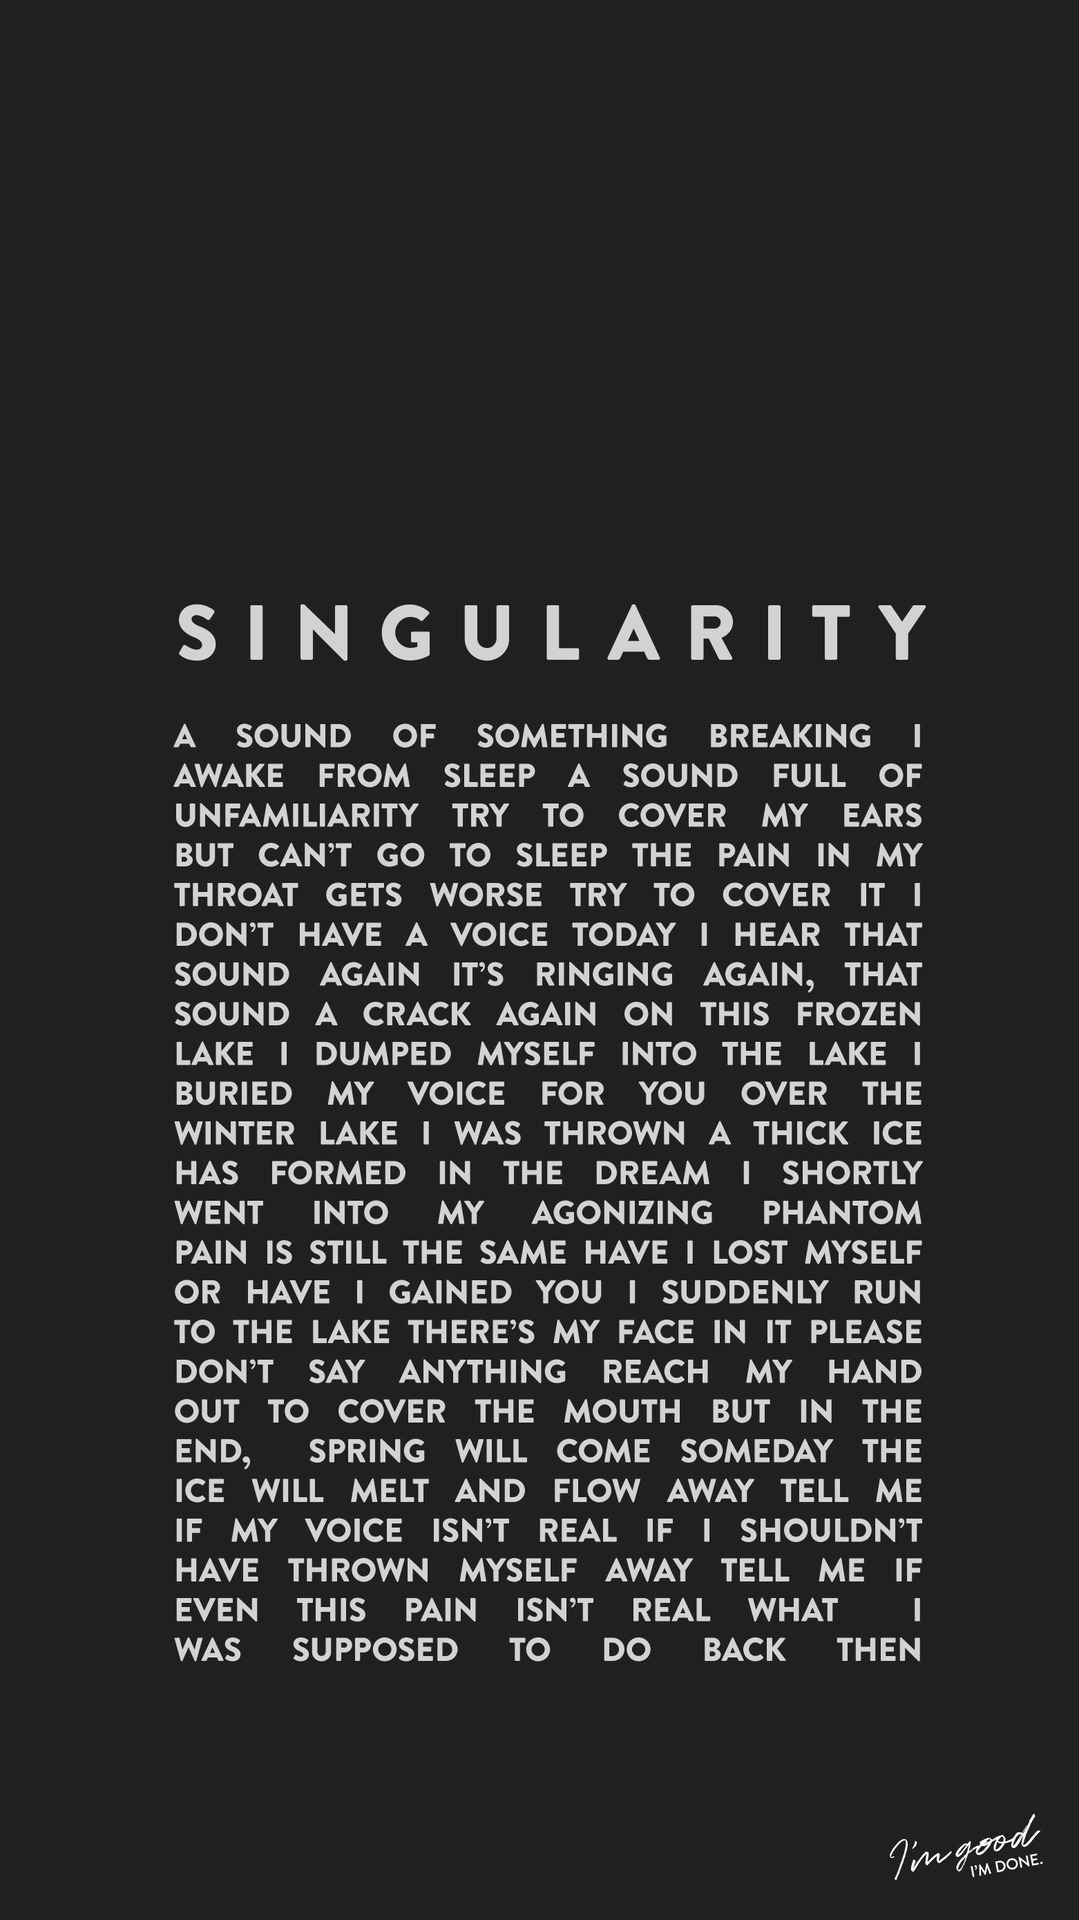 Singularity Wallpapers